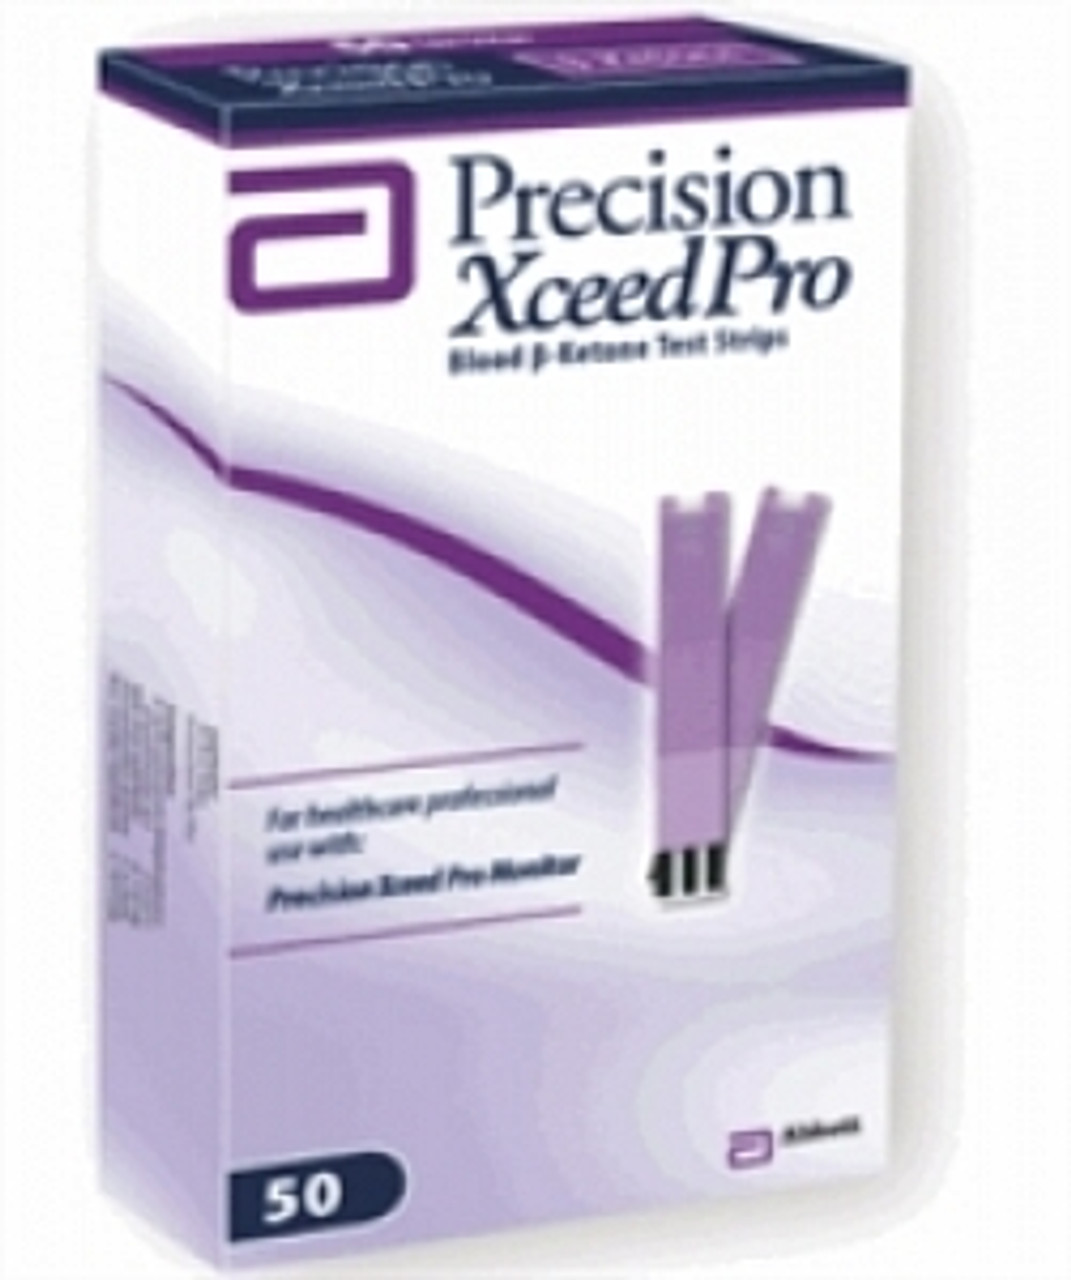 Precision Xtra Test Strips, Blood Glucose - 50 test strips